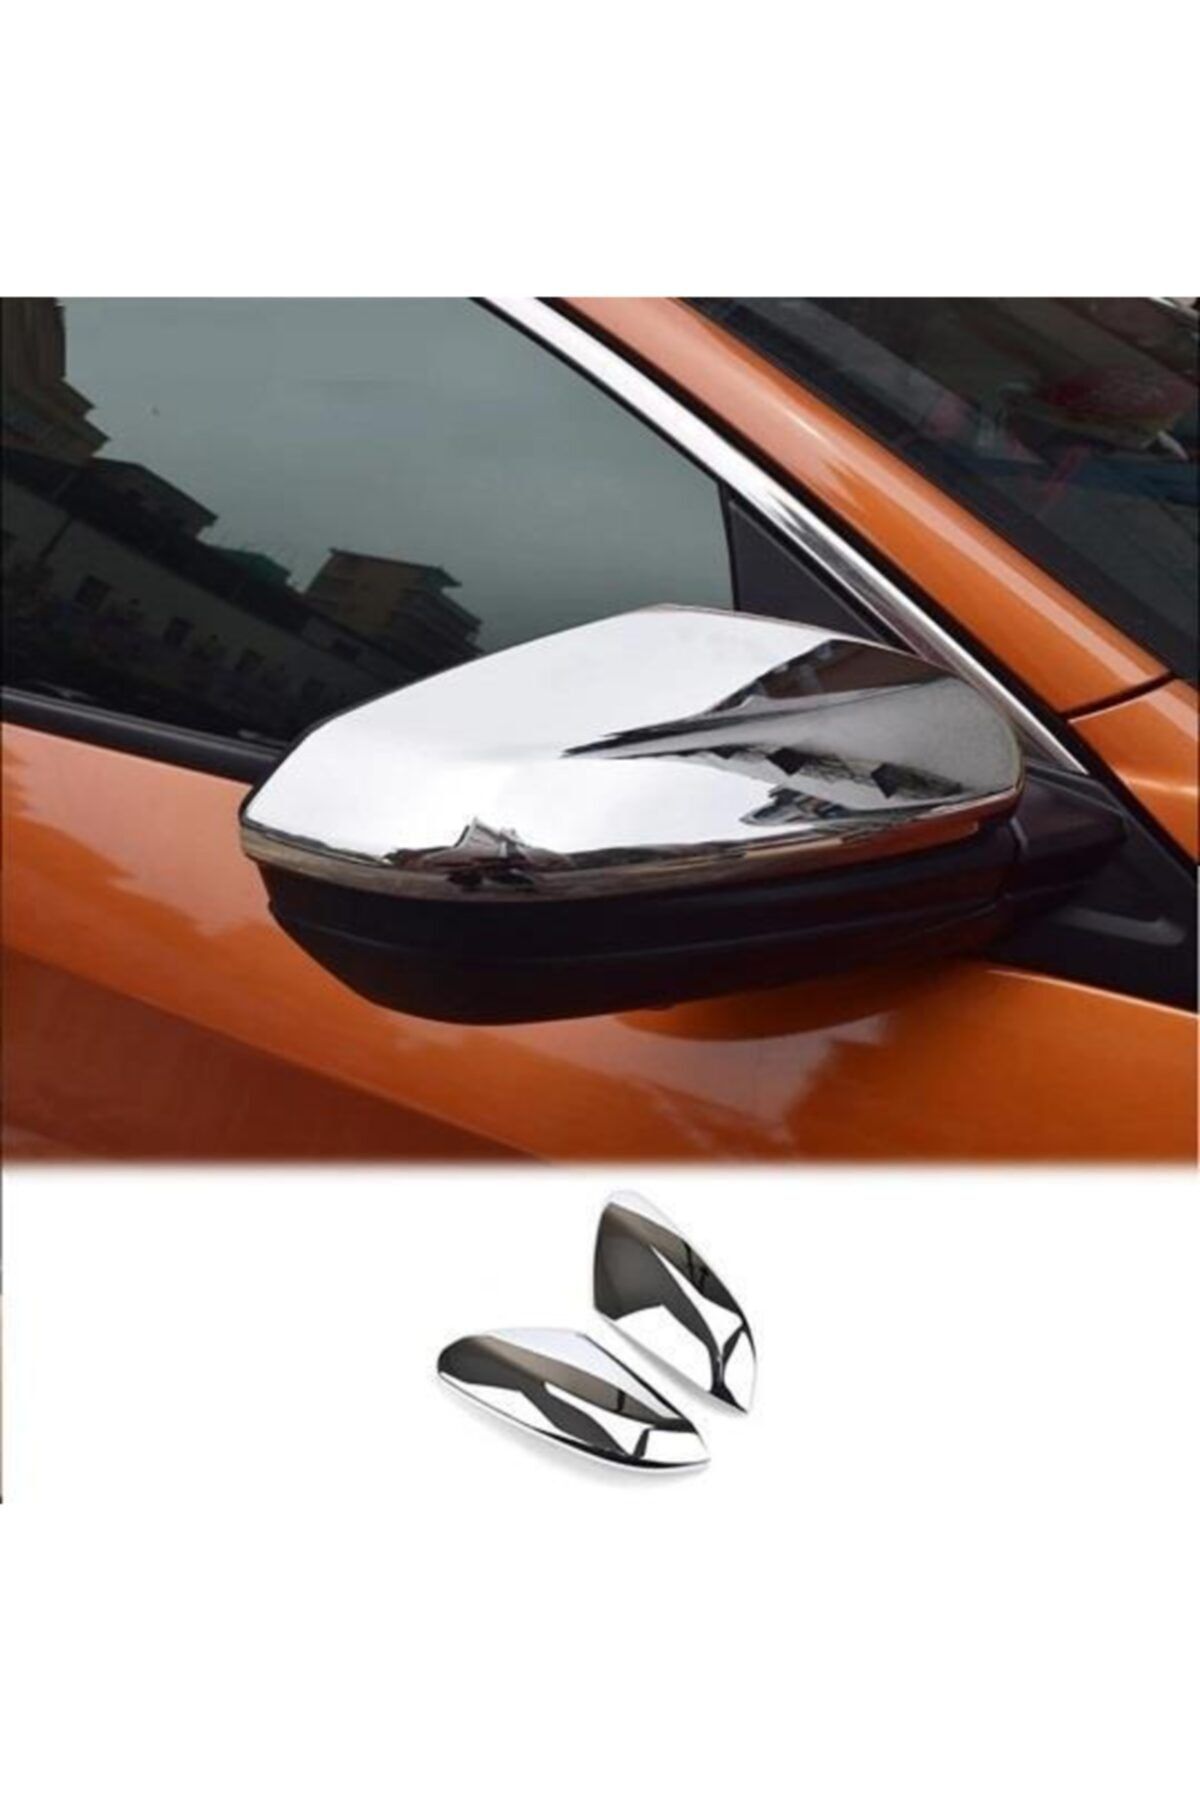 OLED GARAJ Honda Civic İçin Uyumlu Fc5 Krom Ayna Kapağı Kaplama Nikelaj Krom